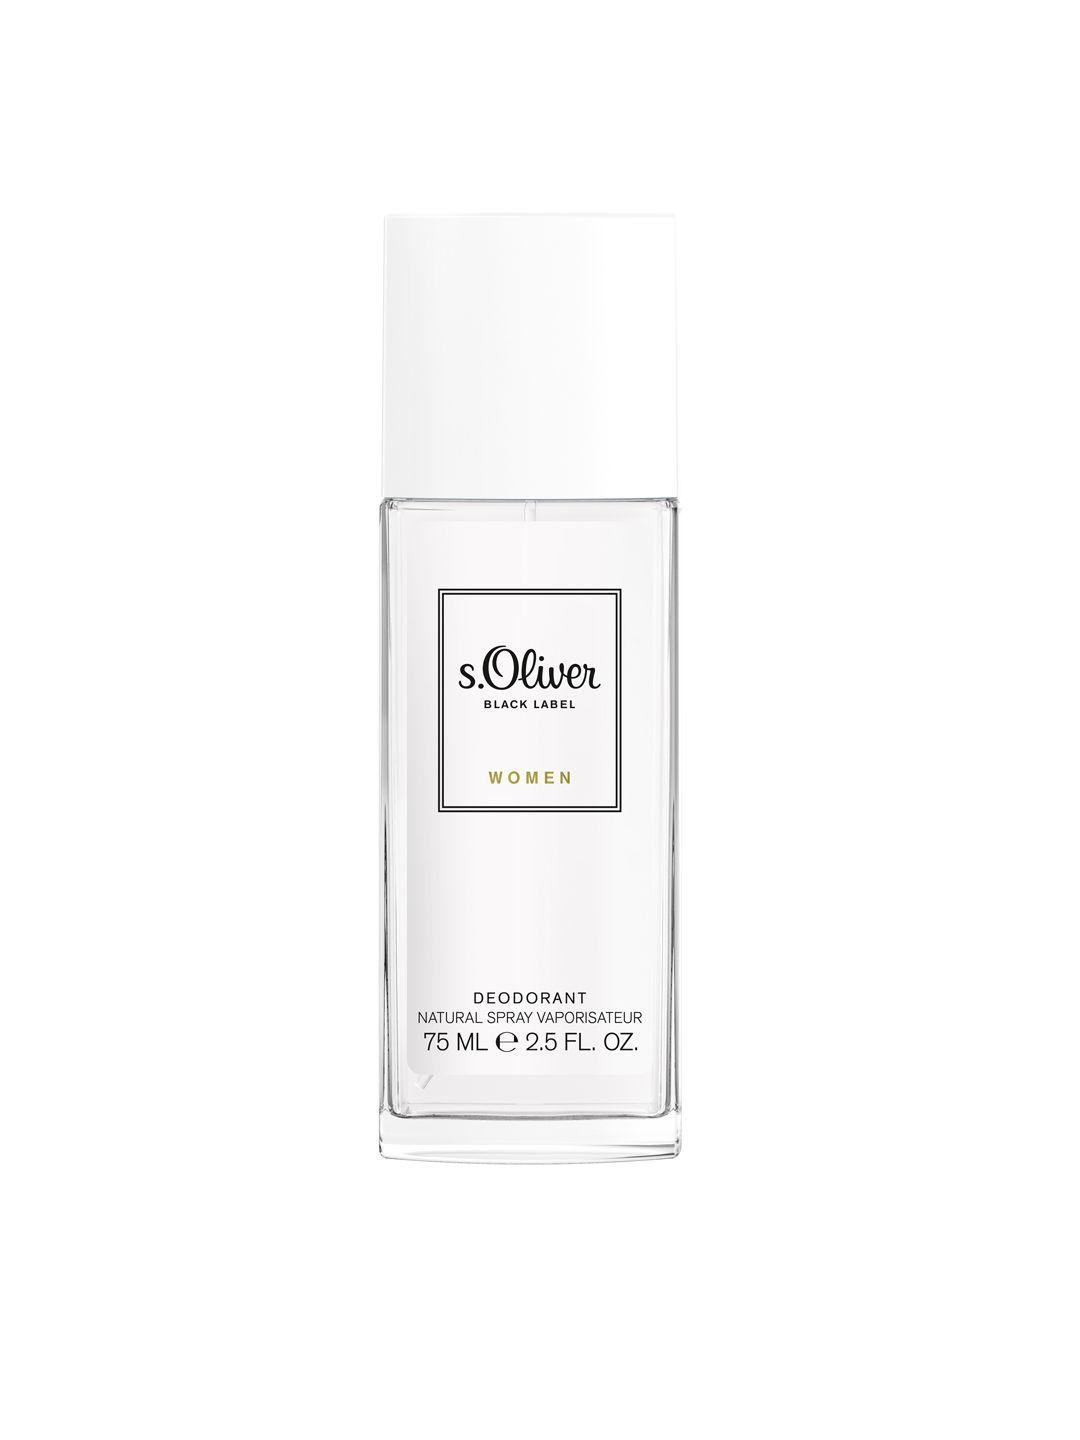 s.oliver-women-black-label-deodorant-75-ml